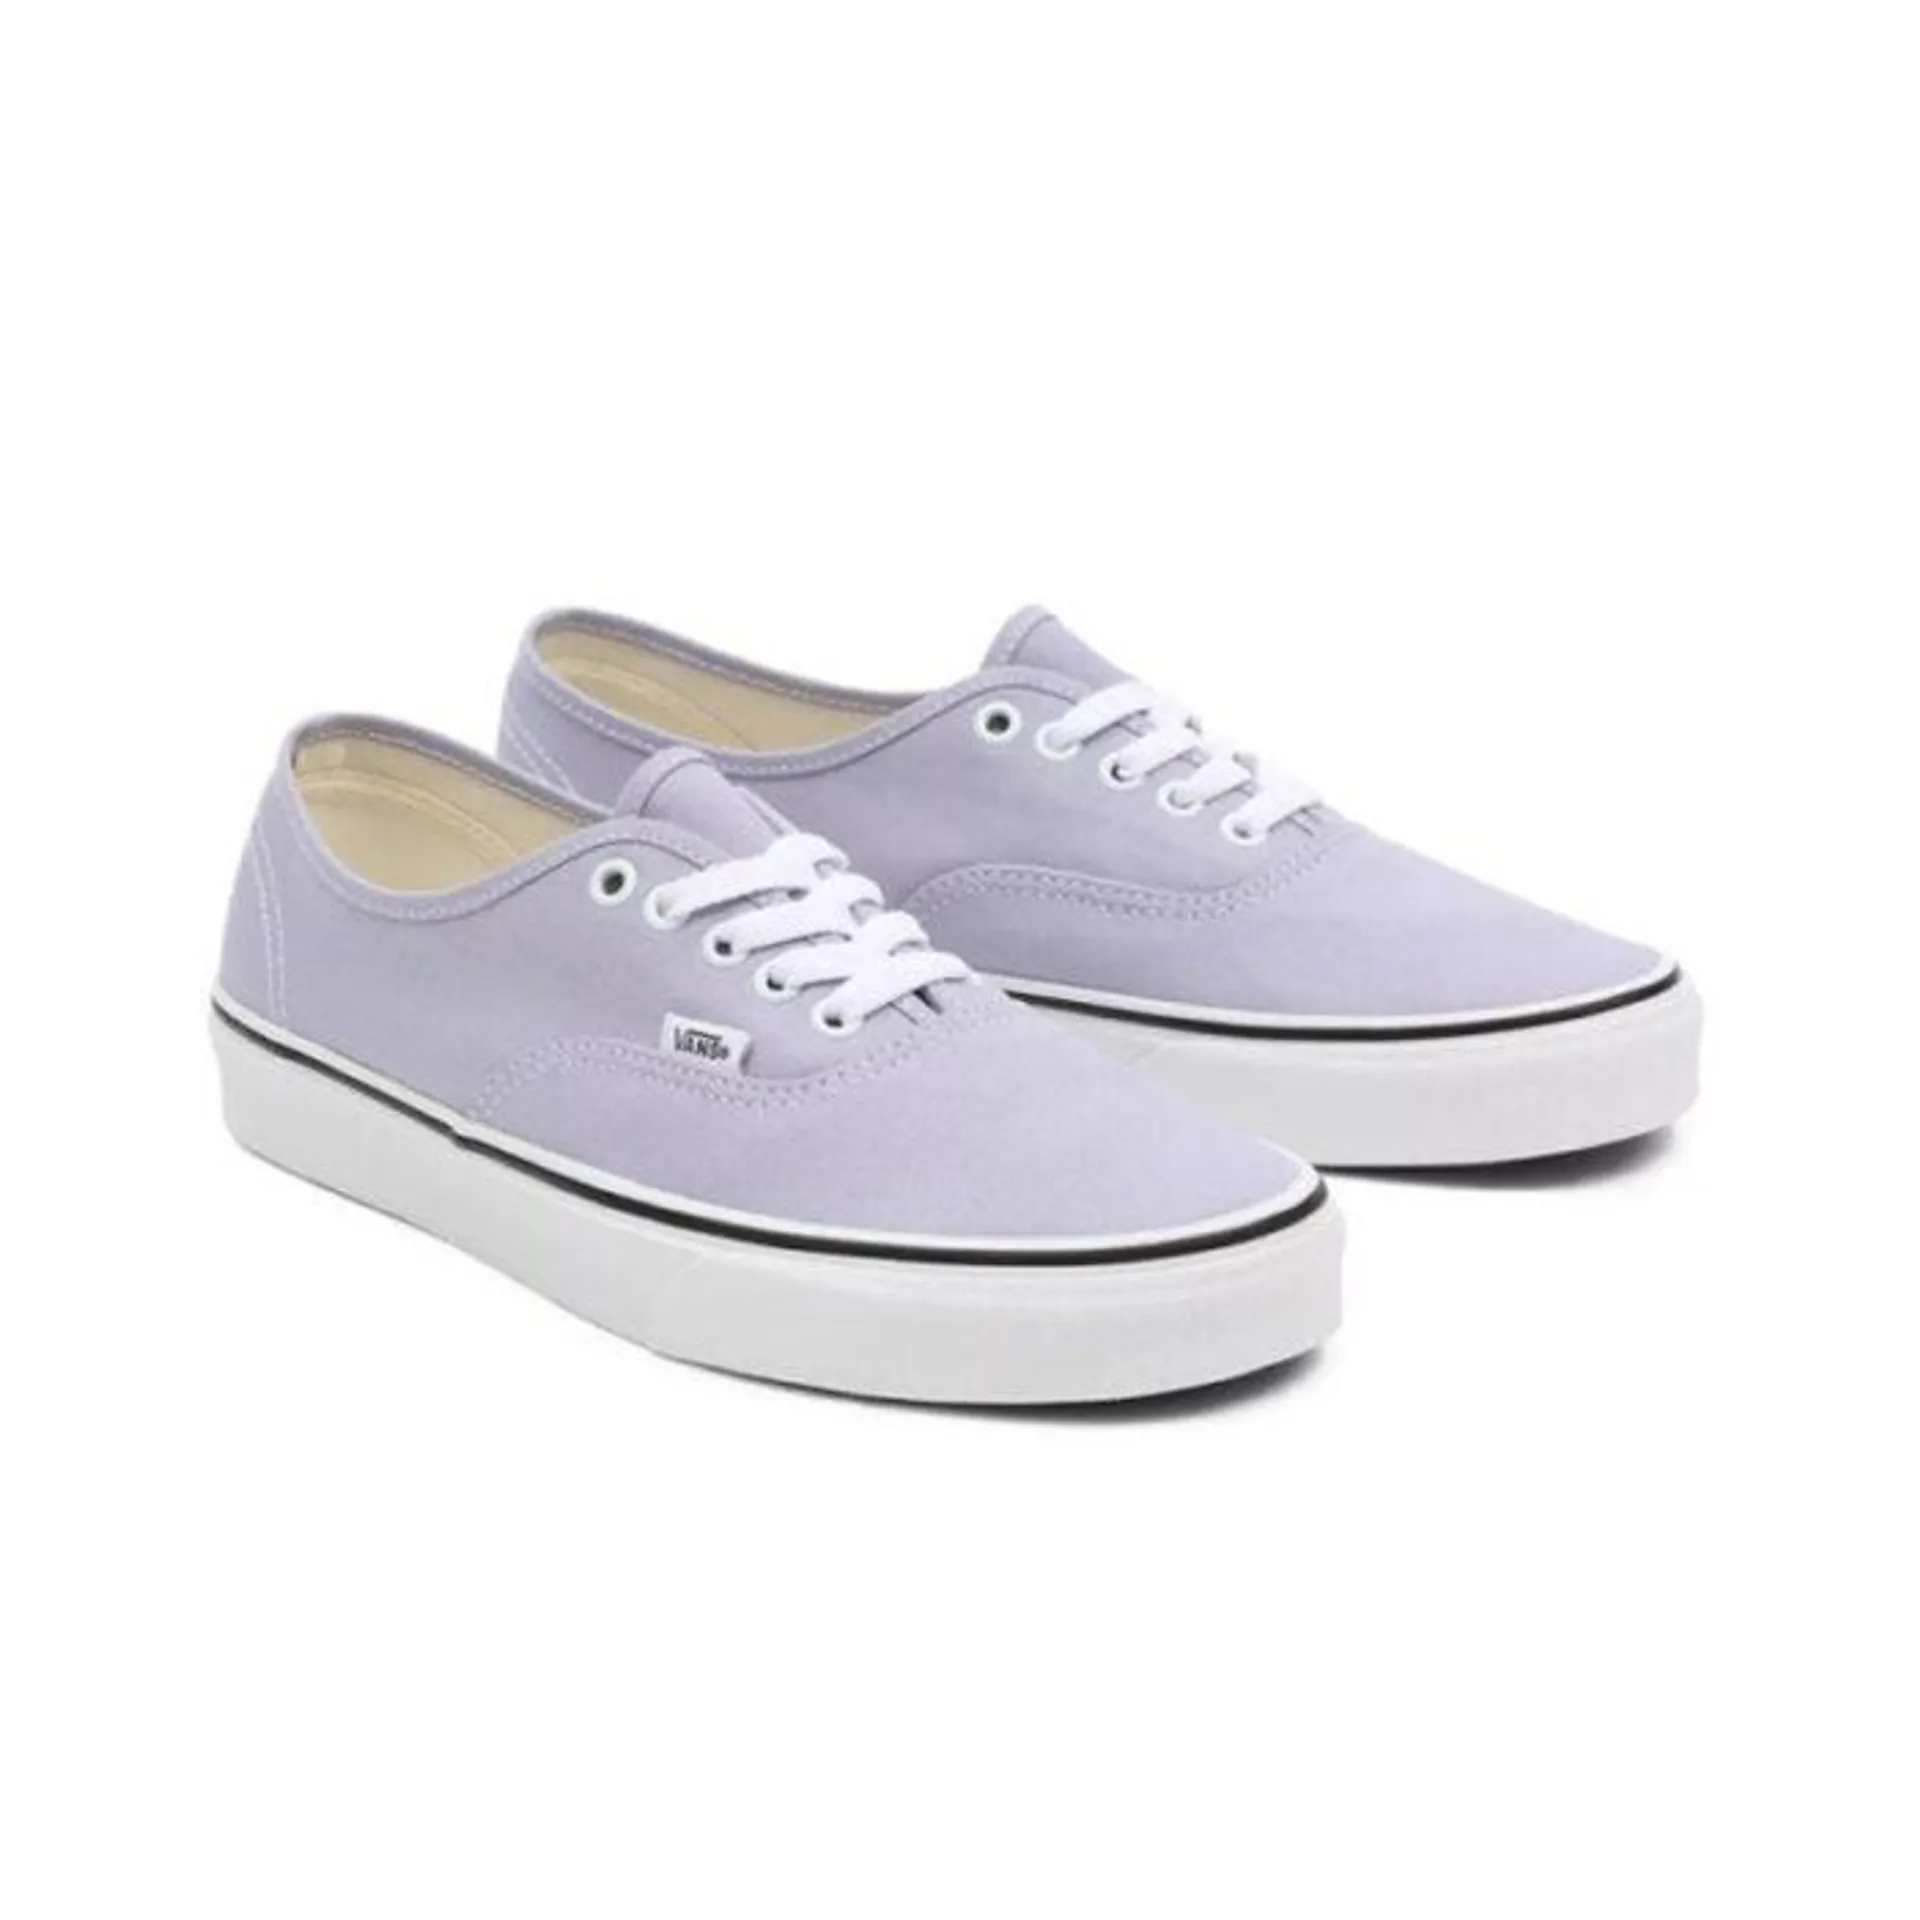 Zapatos Vans Authentic Lavender Talla 9.0